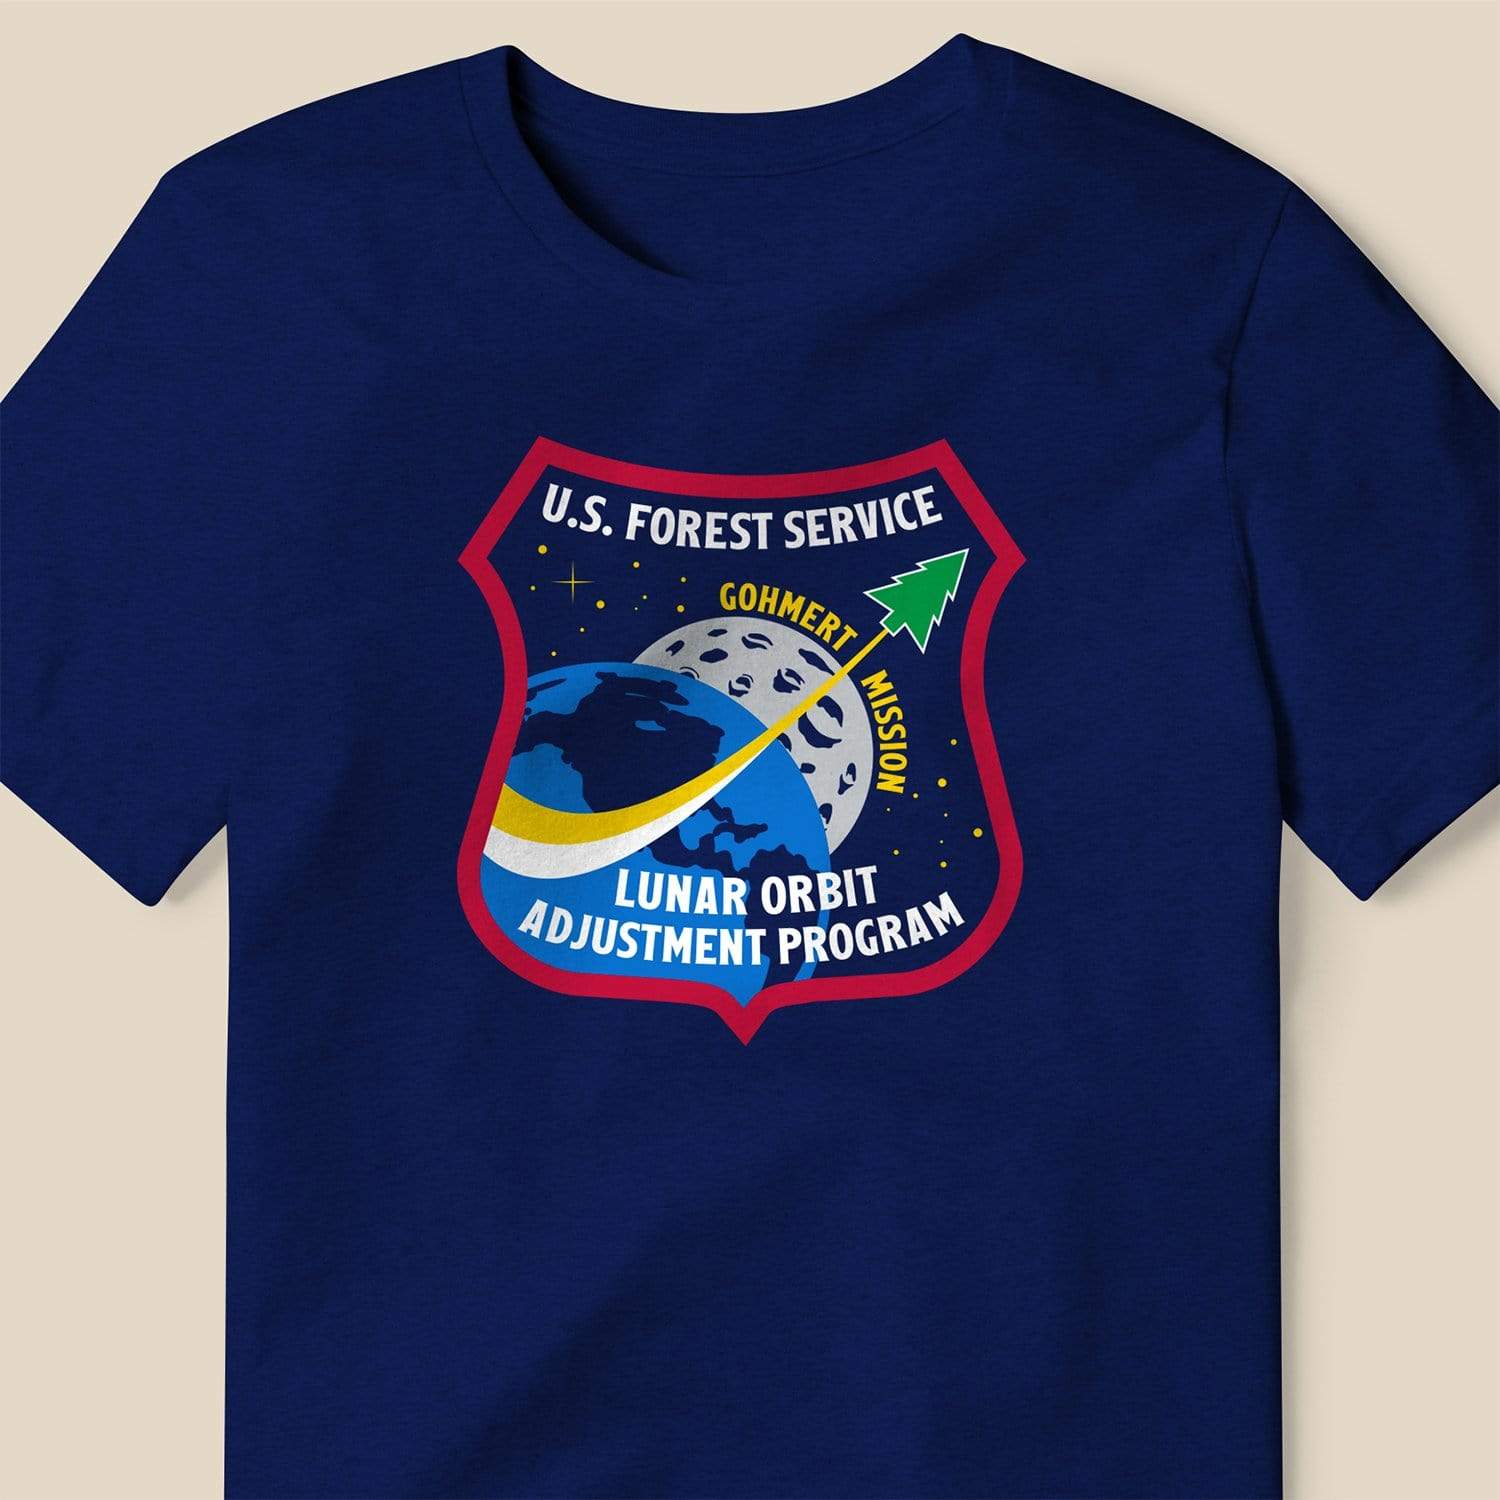 U.S. Forest Service Lunar Orbit Adjustment Program T-shirt